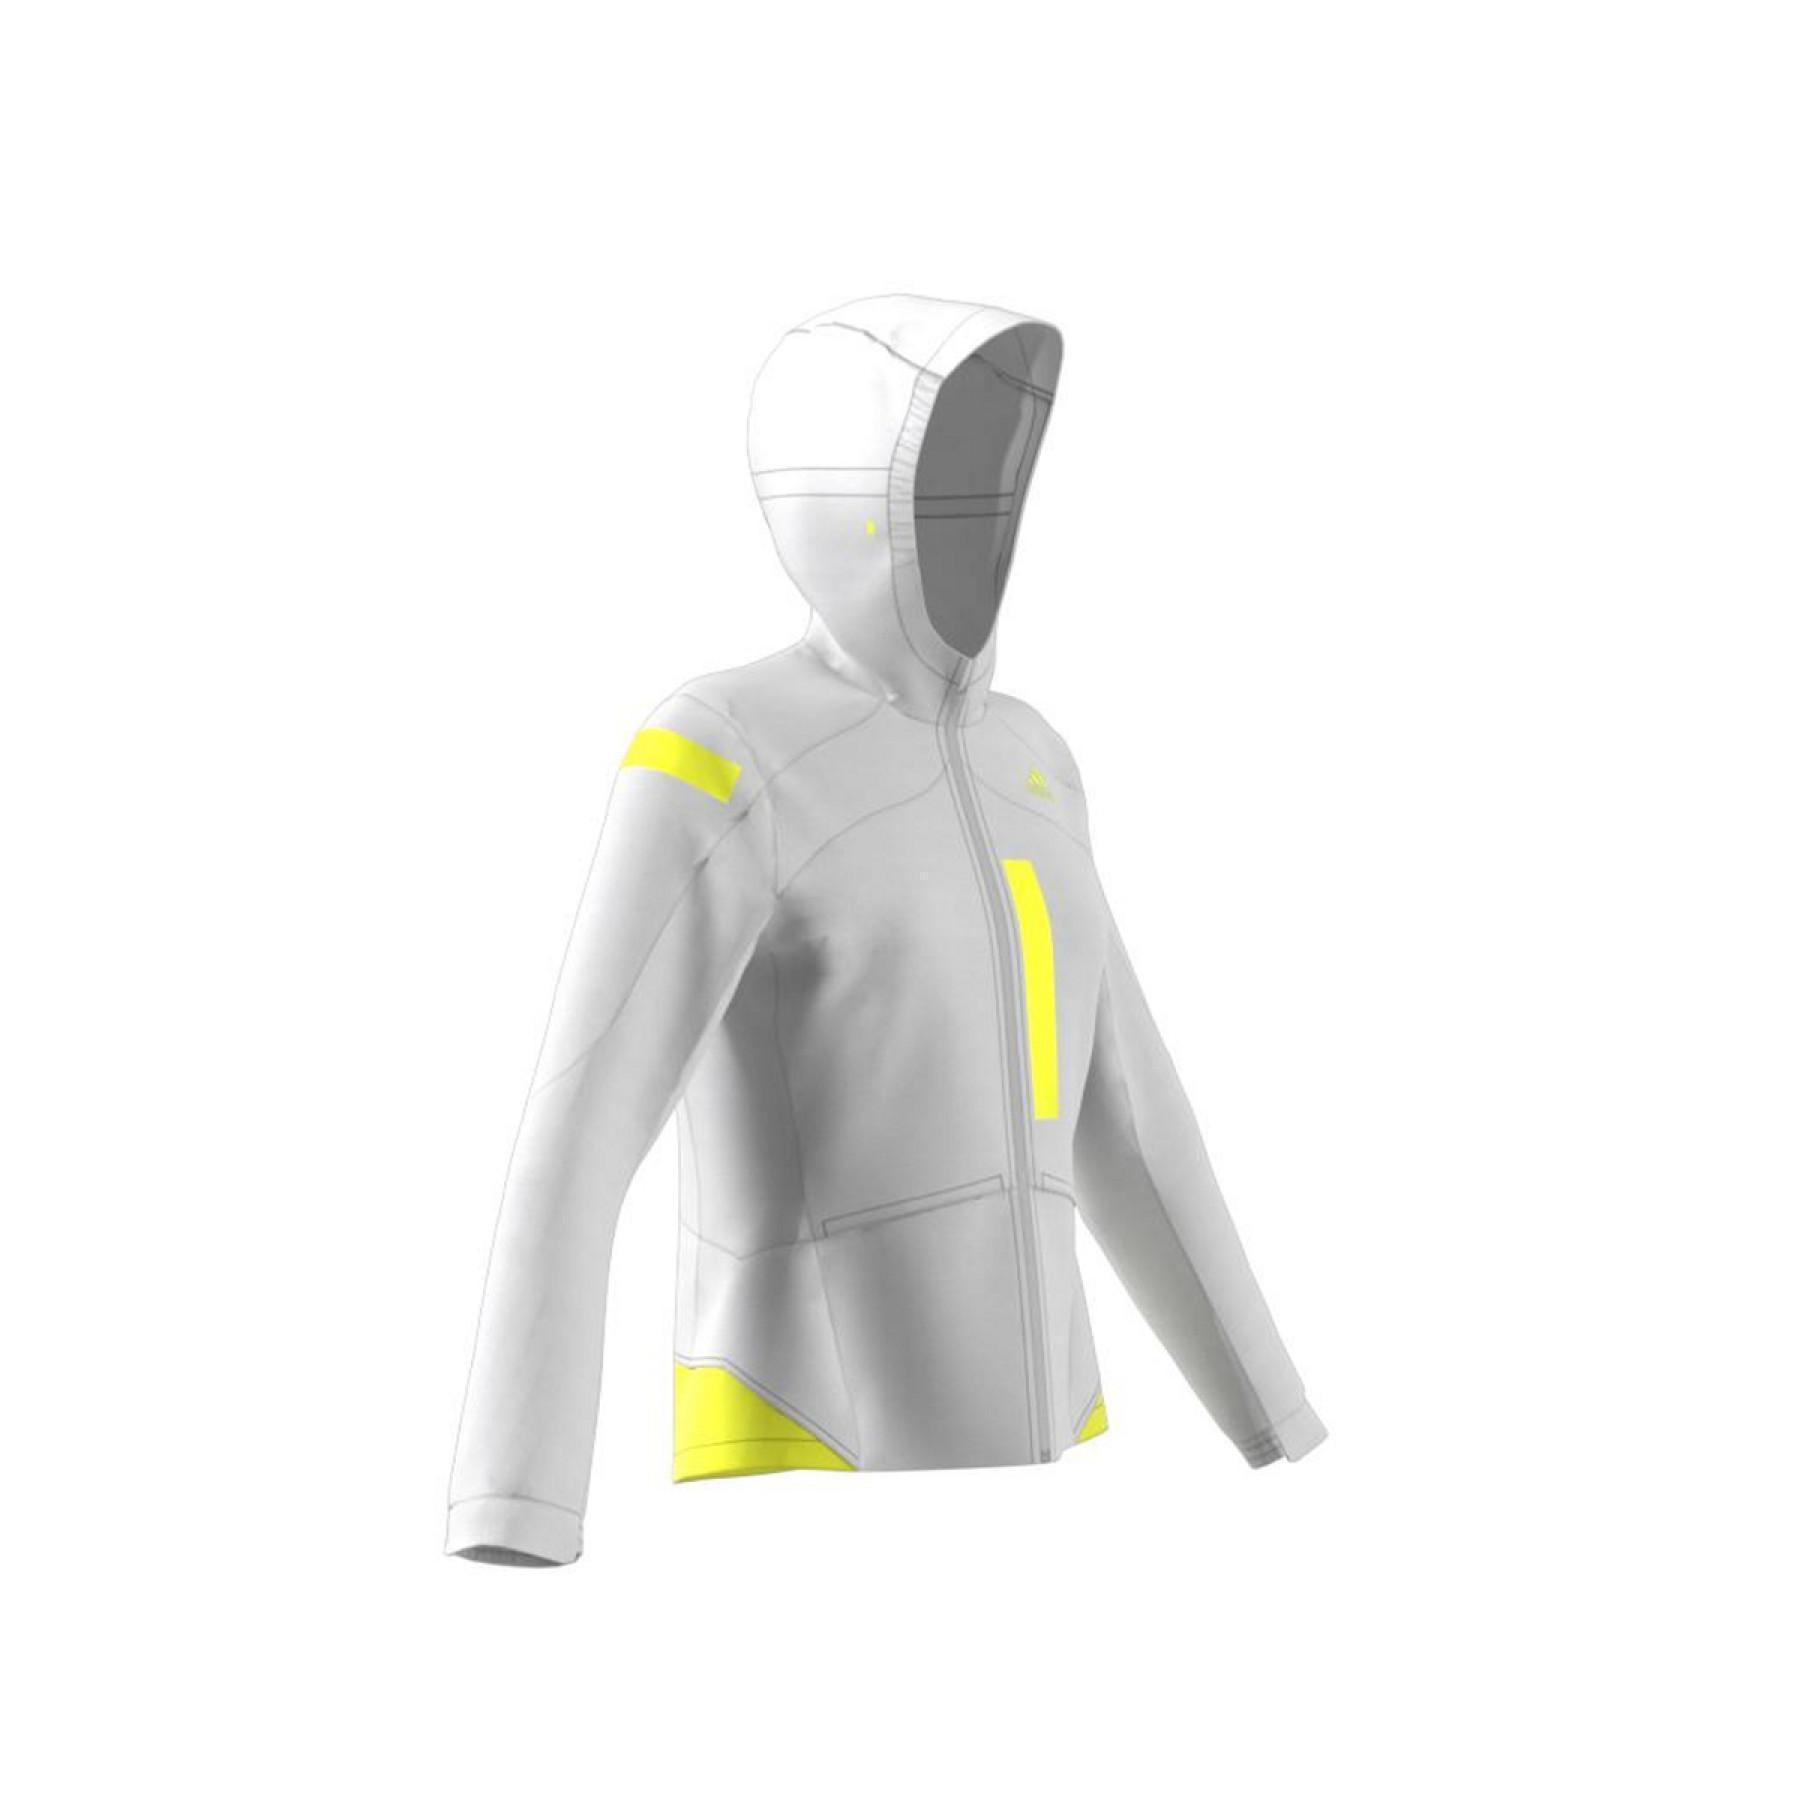 Jaqueta de mulher adidas Marathon Translucent